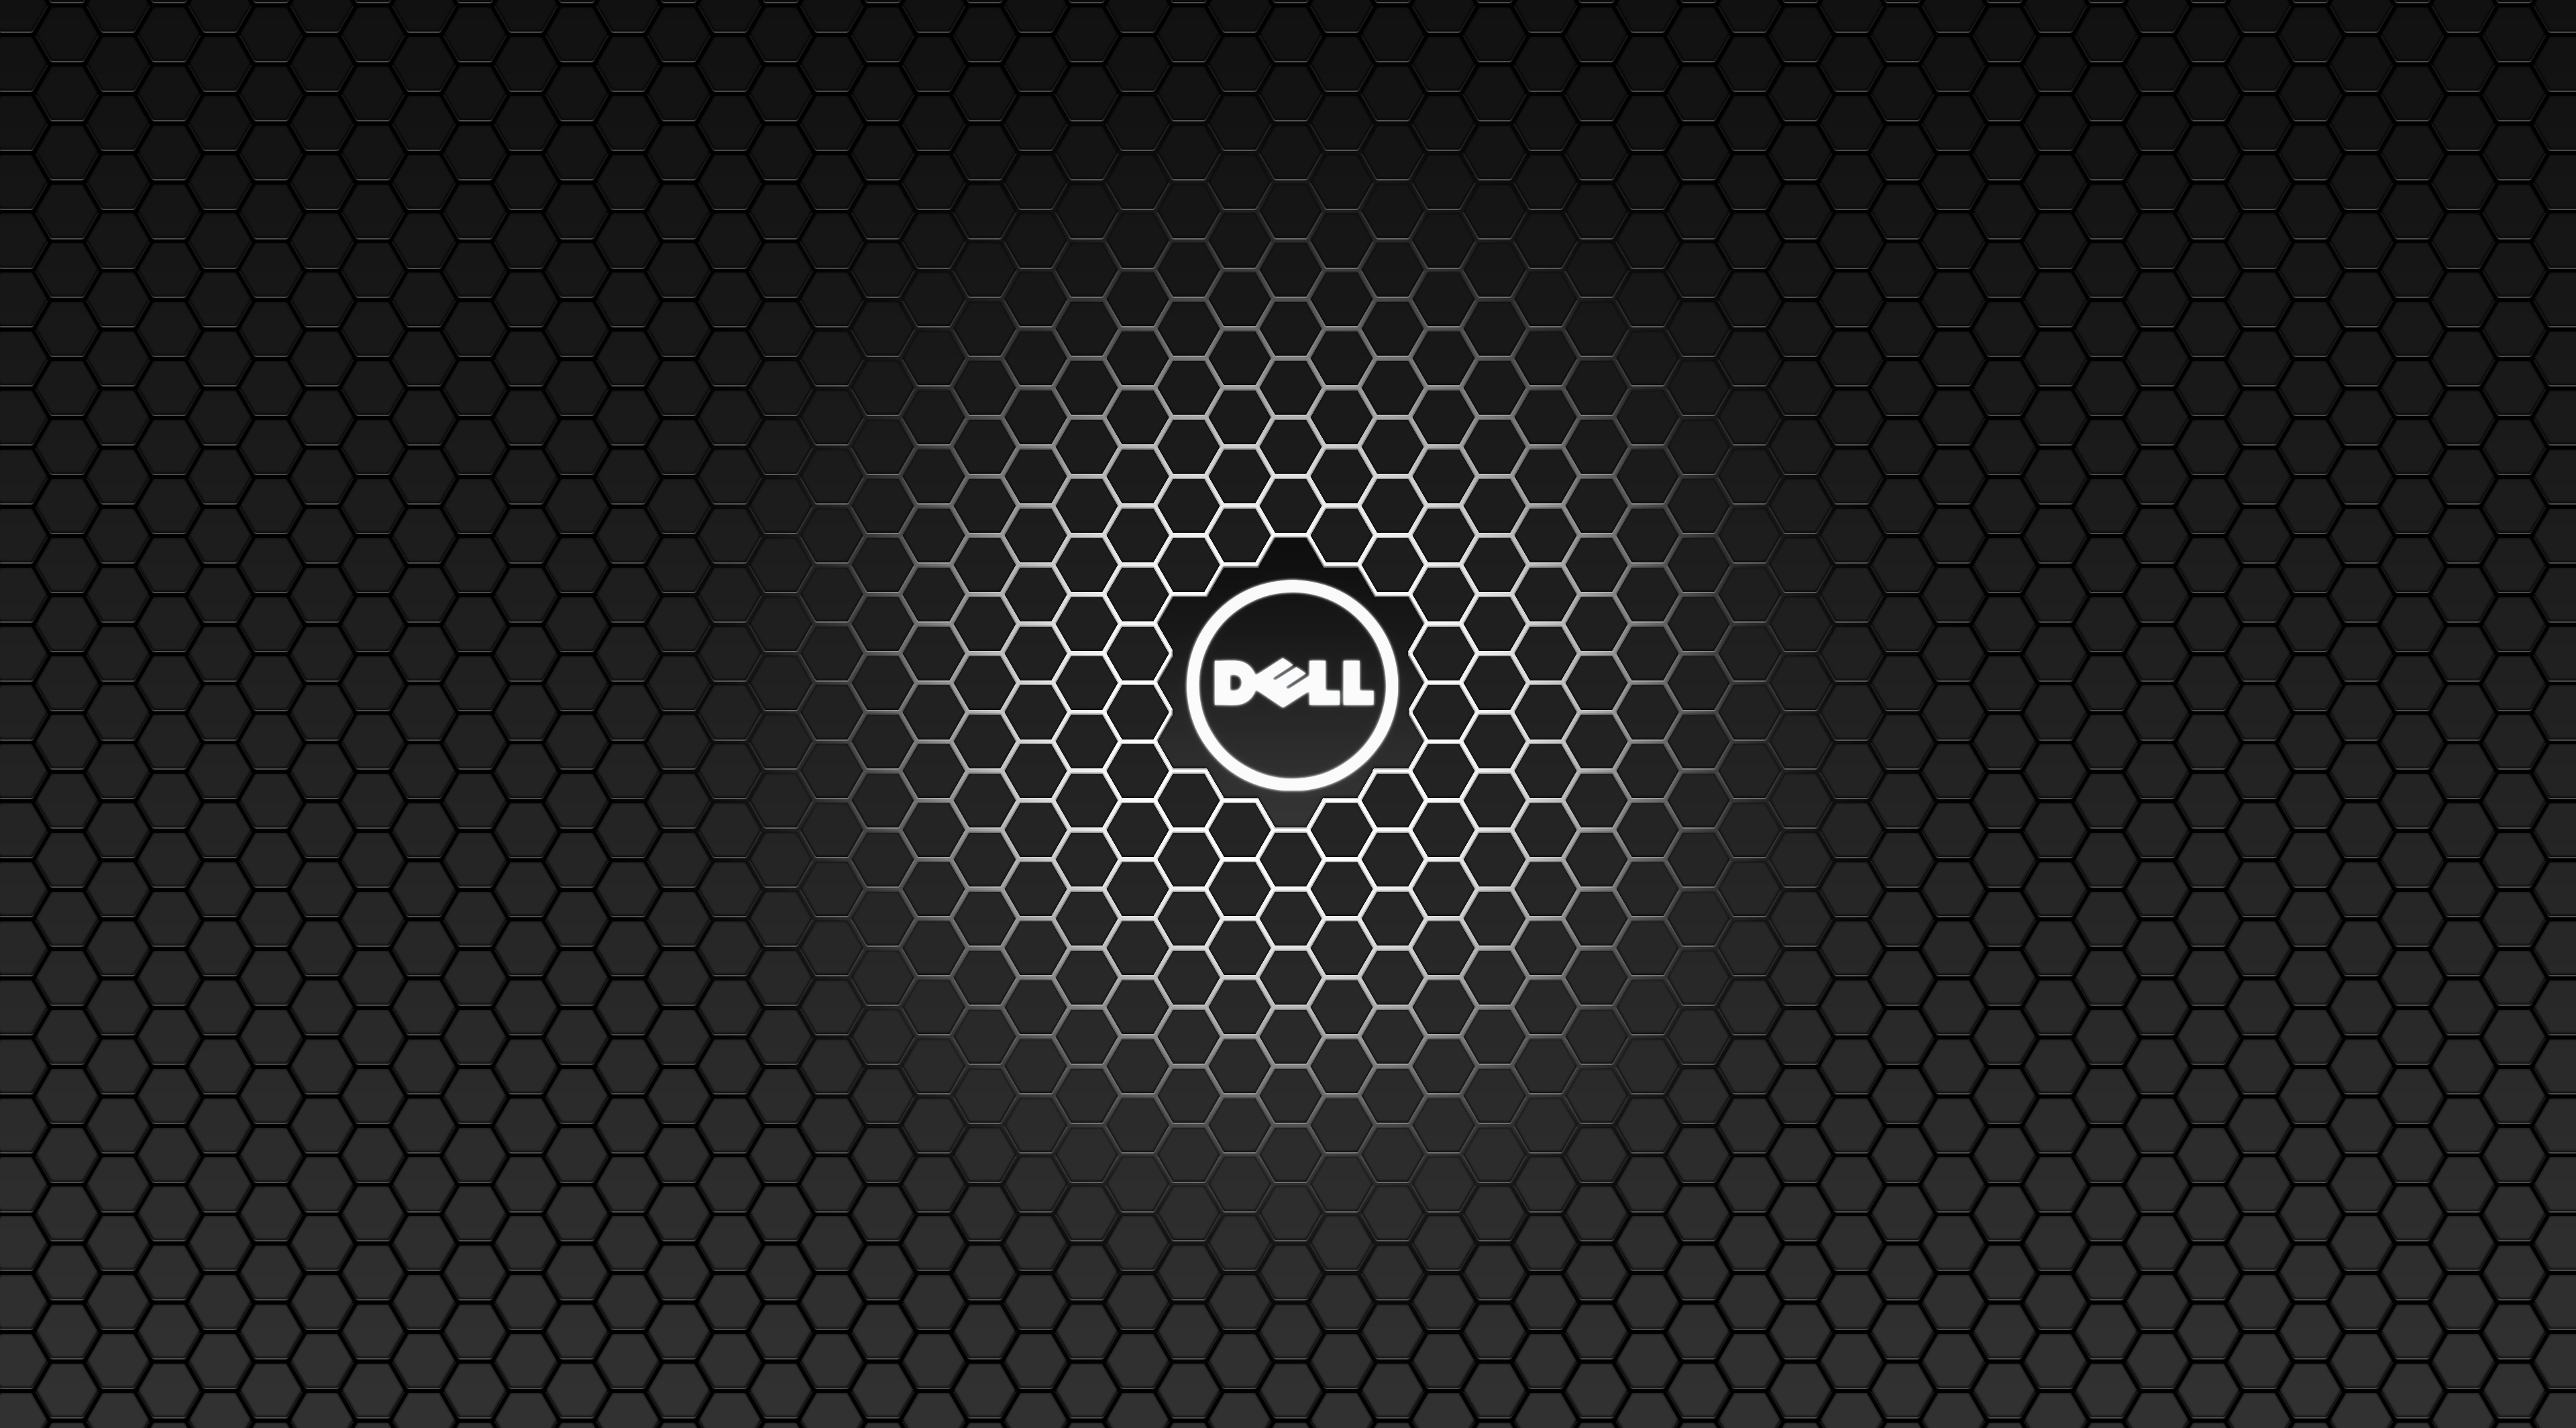 Dell Logo Hexagonal Carbon Fiber Pattern Desktop Wallpaper